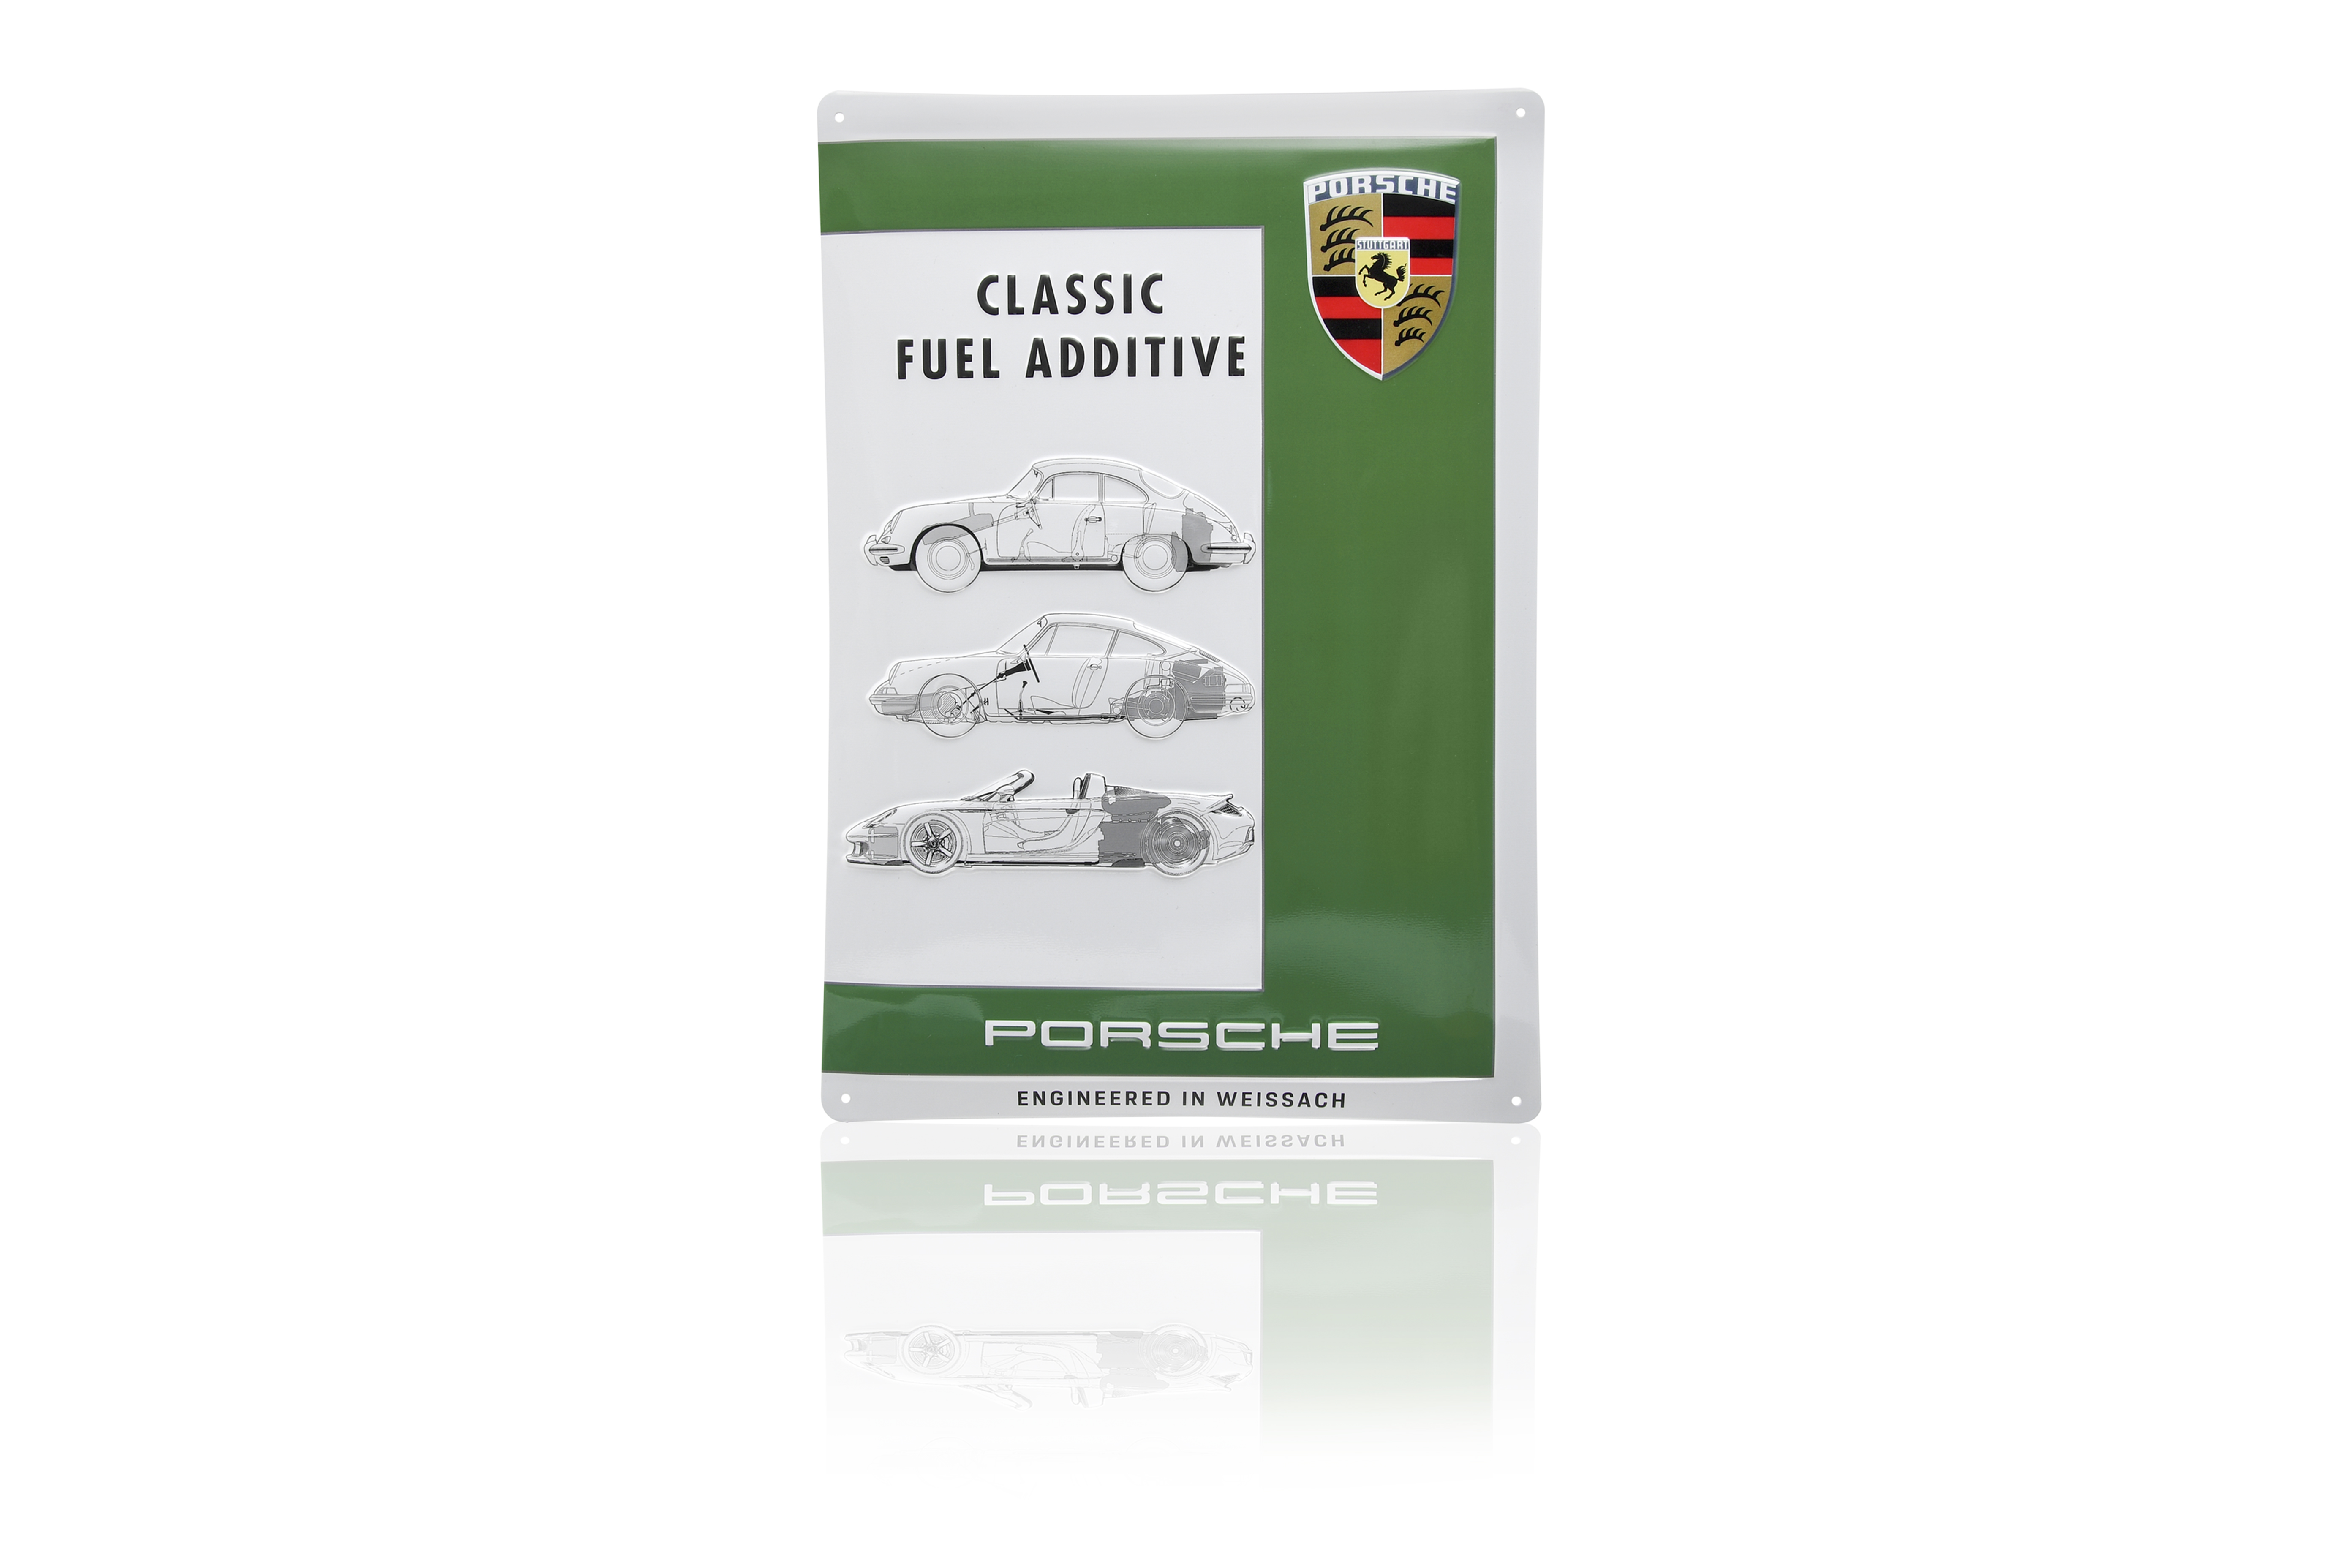 Porsche Classic Fuel Additive Tin Sign zoom